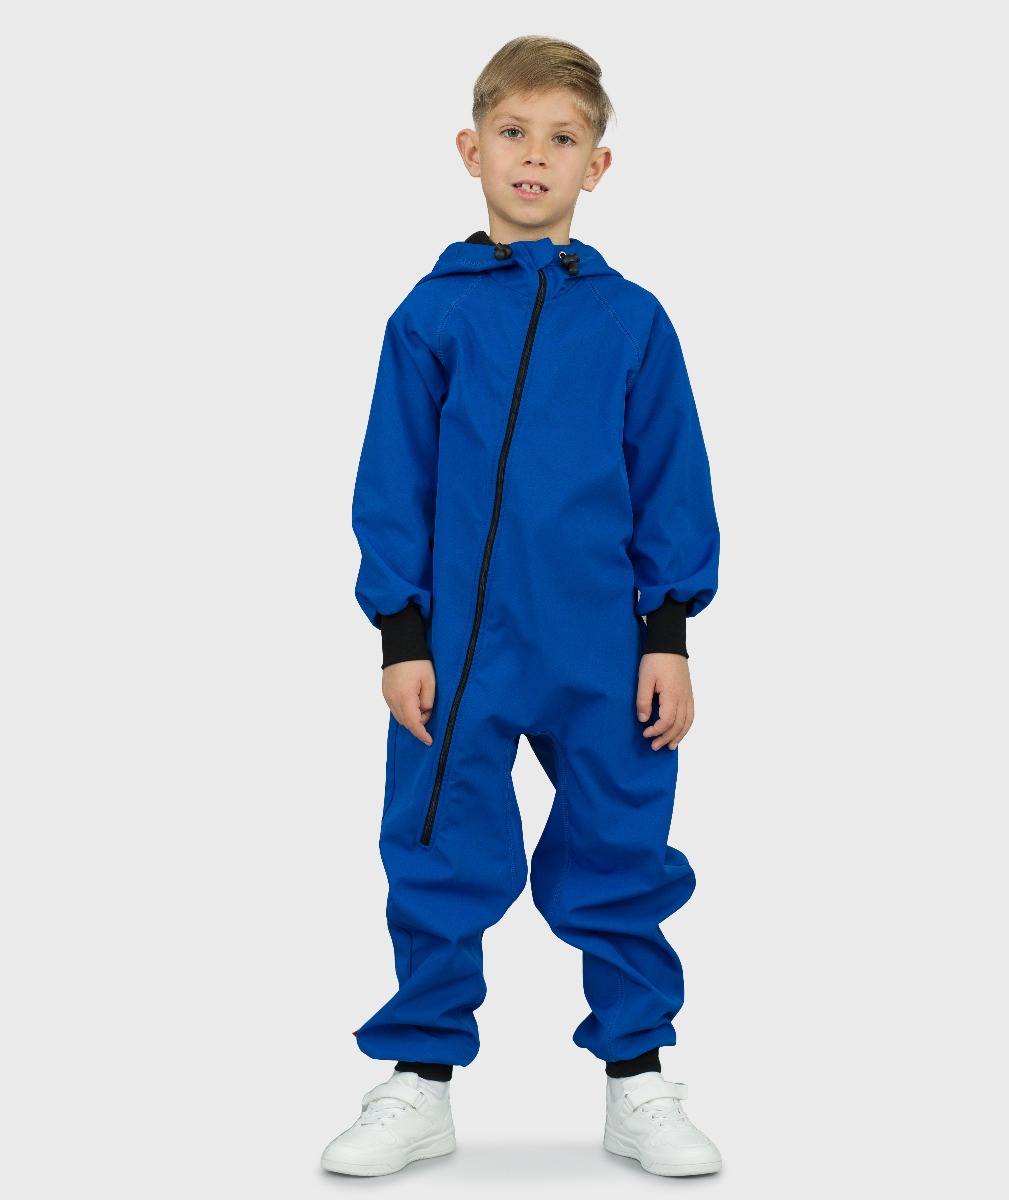 Waterproof Softshell Overall Comfy Blue Jumpsuit von iELM